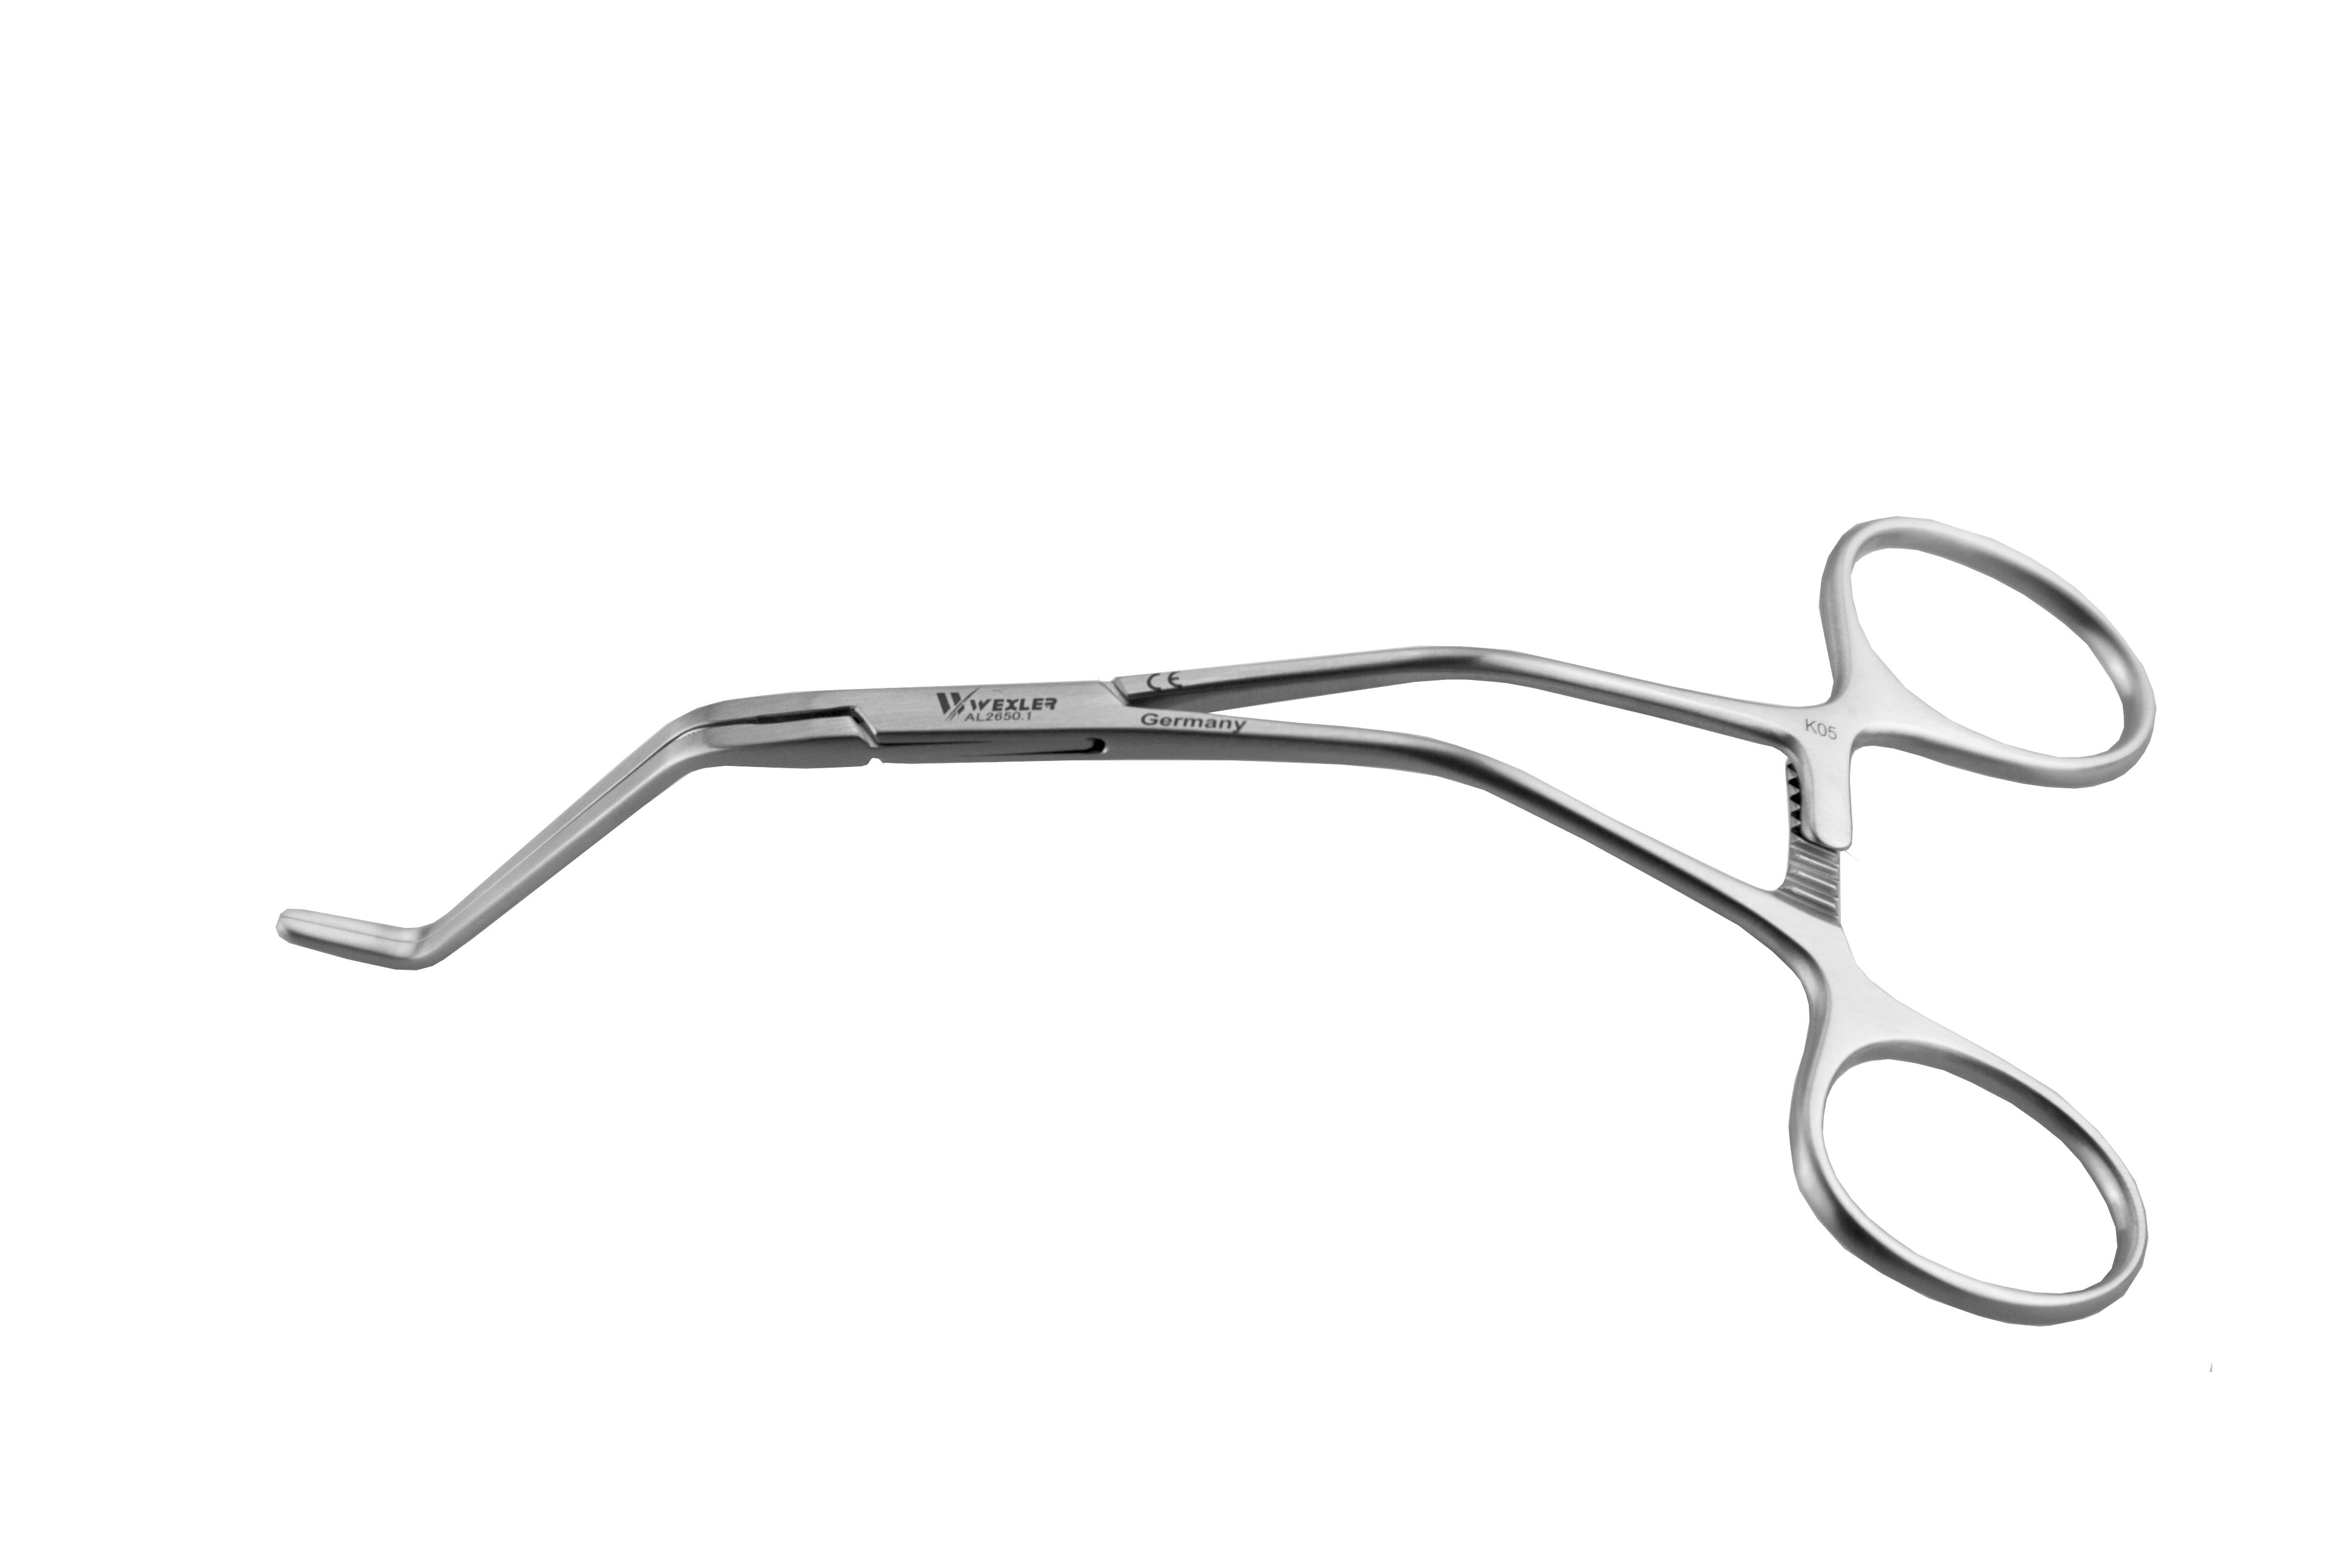 Amato Pediatric Clamp - 10mm Angled X-Fine DeBakey Atraumatic jaws